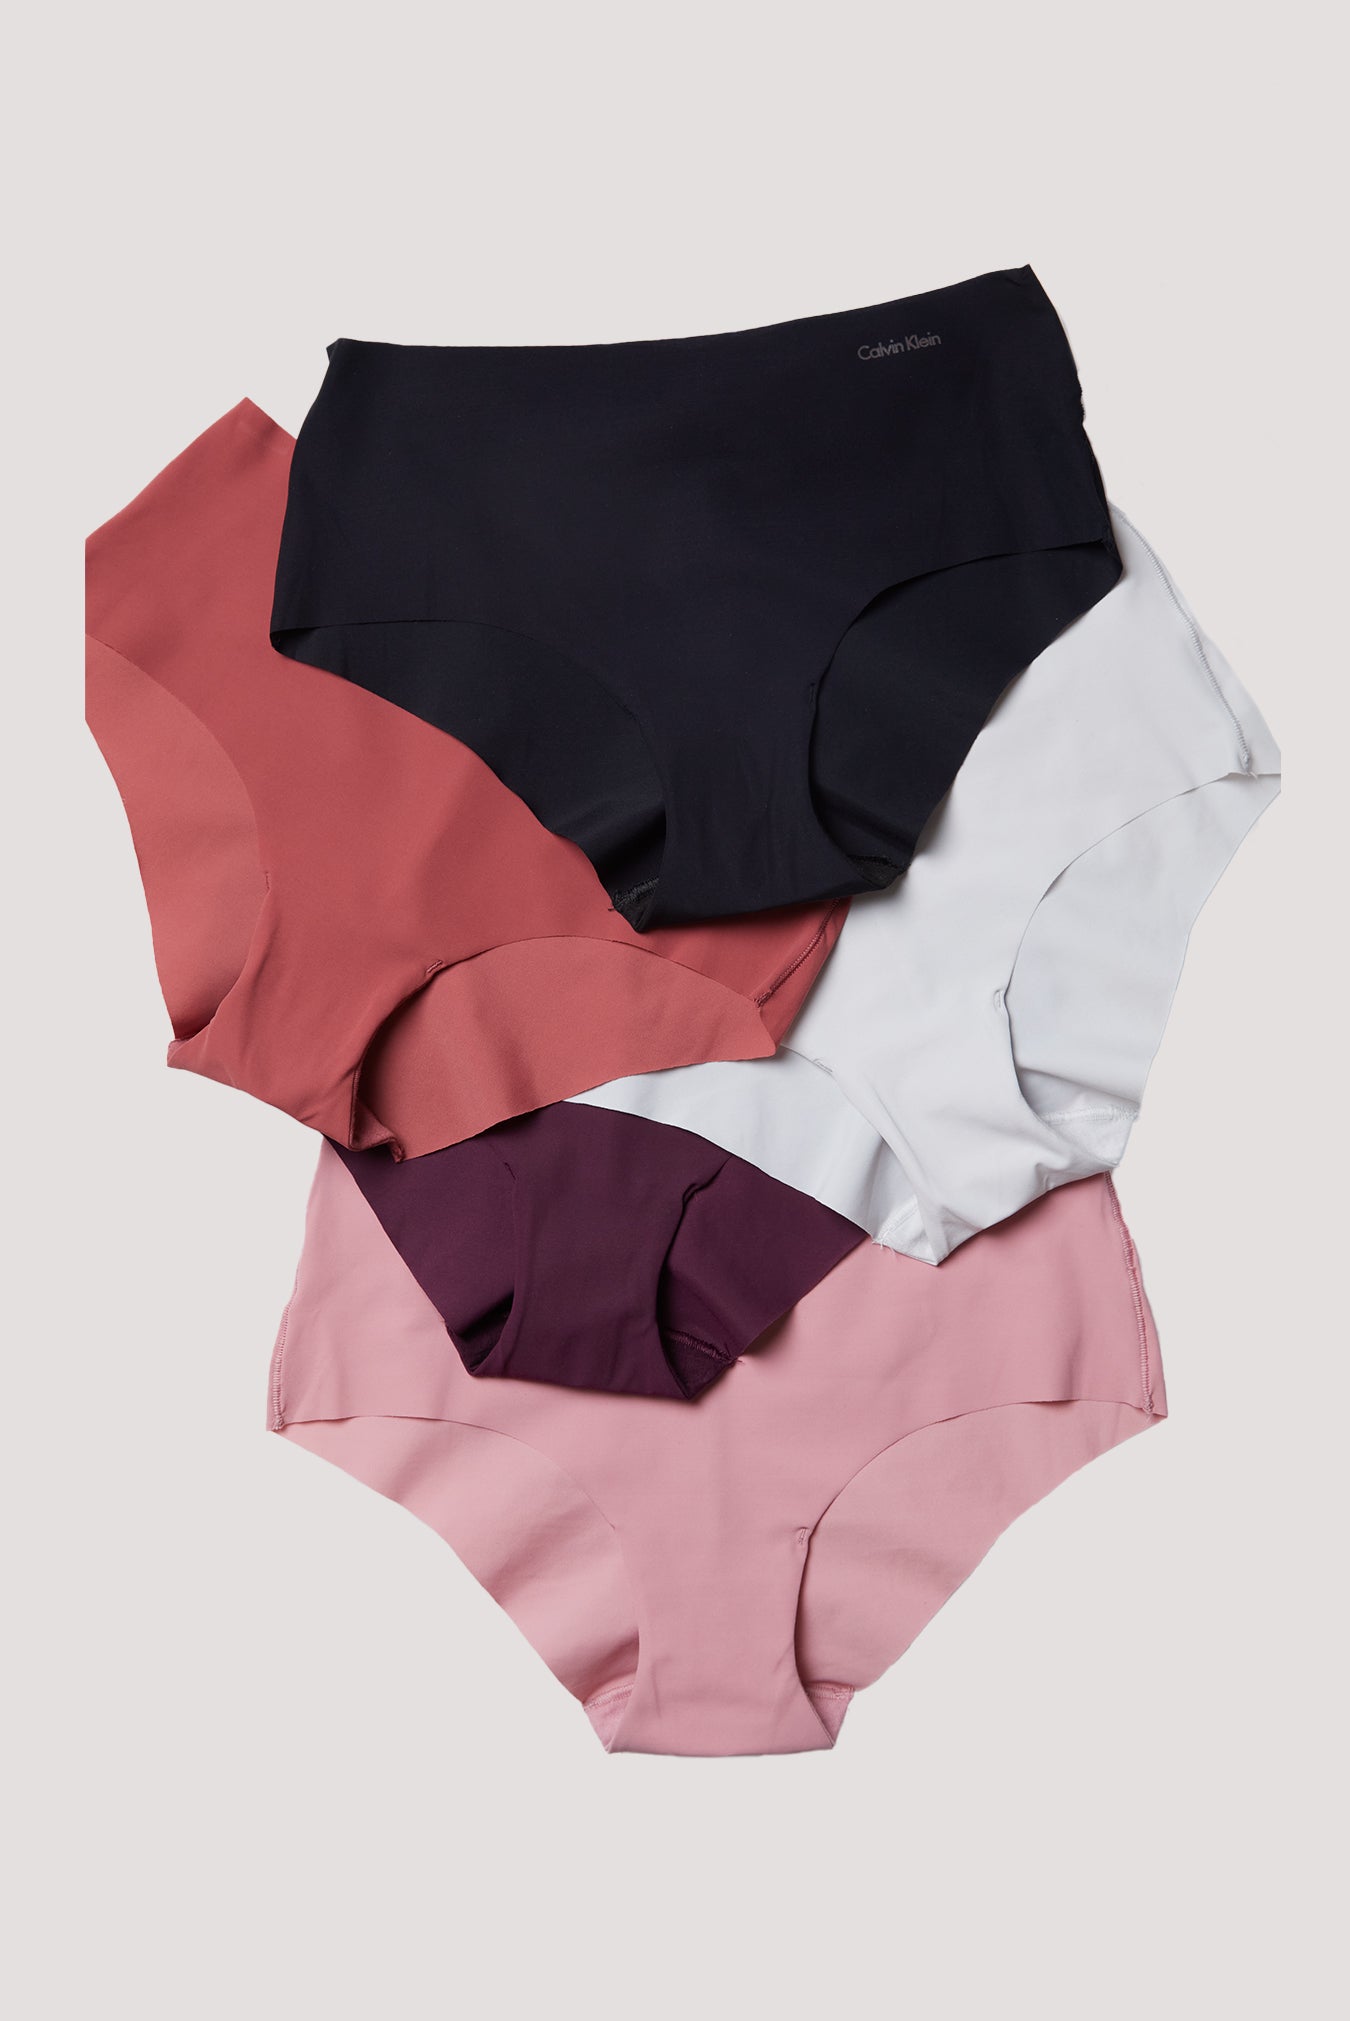 CALVIN KLEIN Women`s 3 Pack Hipster Underwear Panty, Small, Pink